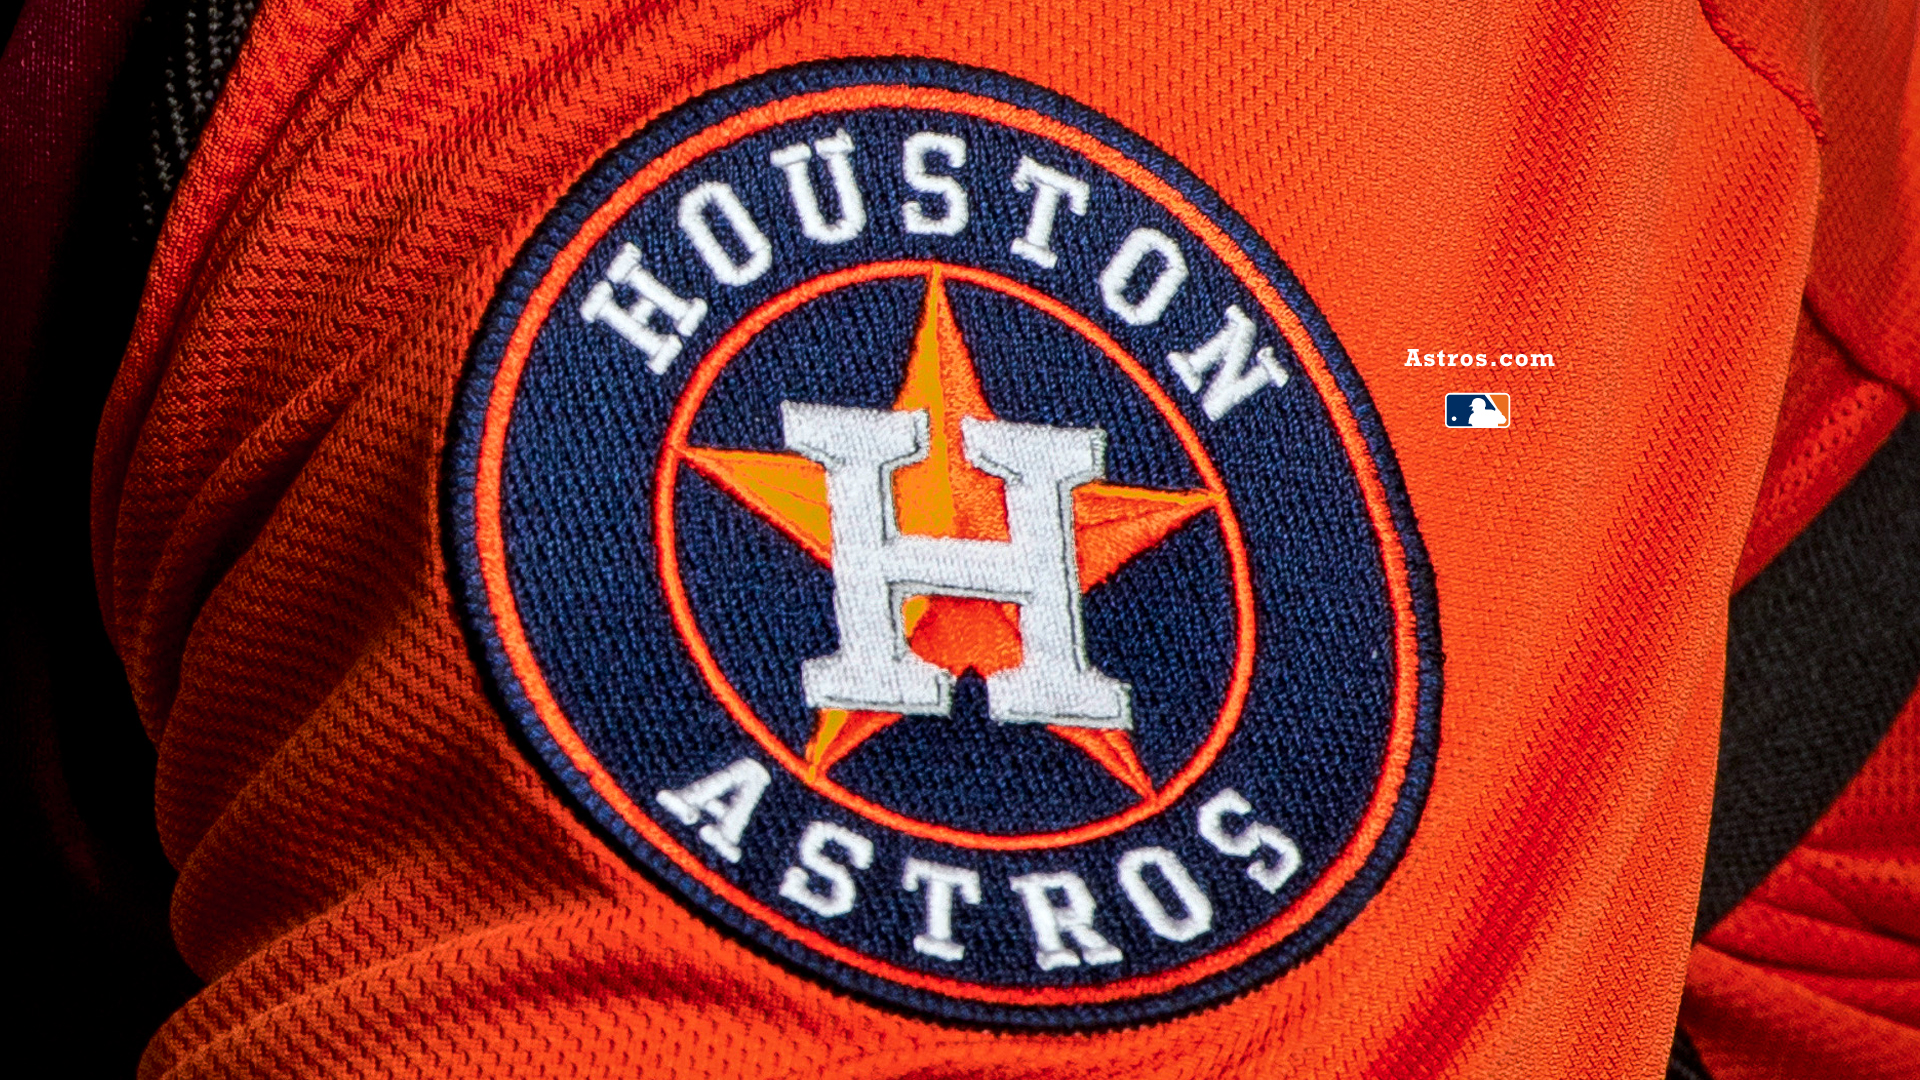 Houston Astros Wallpaper   Desktop Phone Tablet astroscom Fan